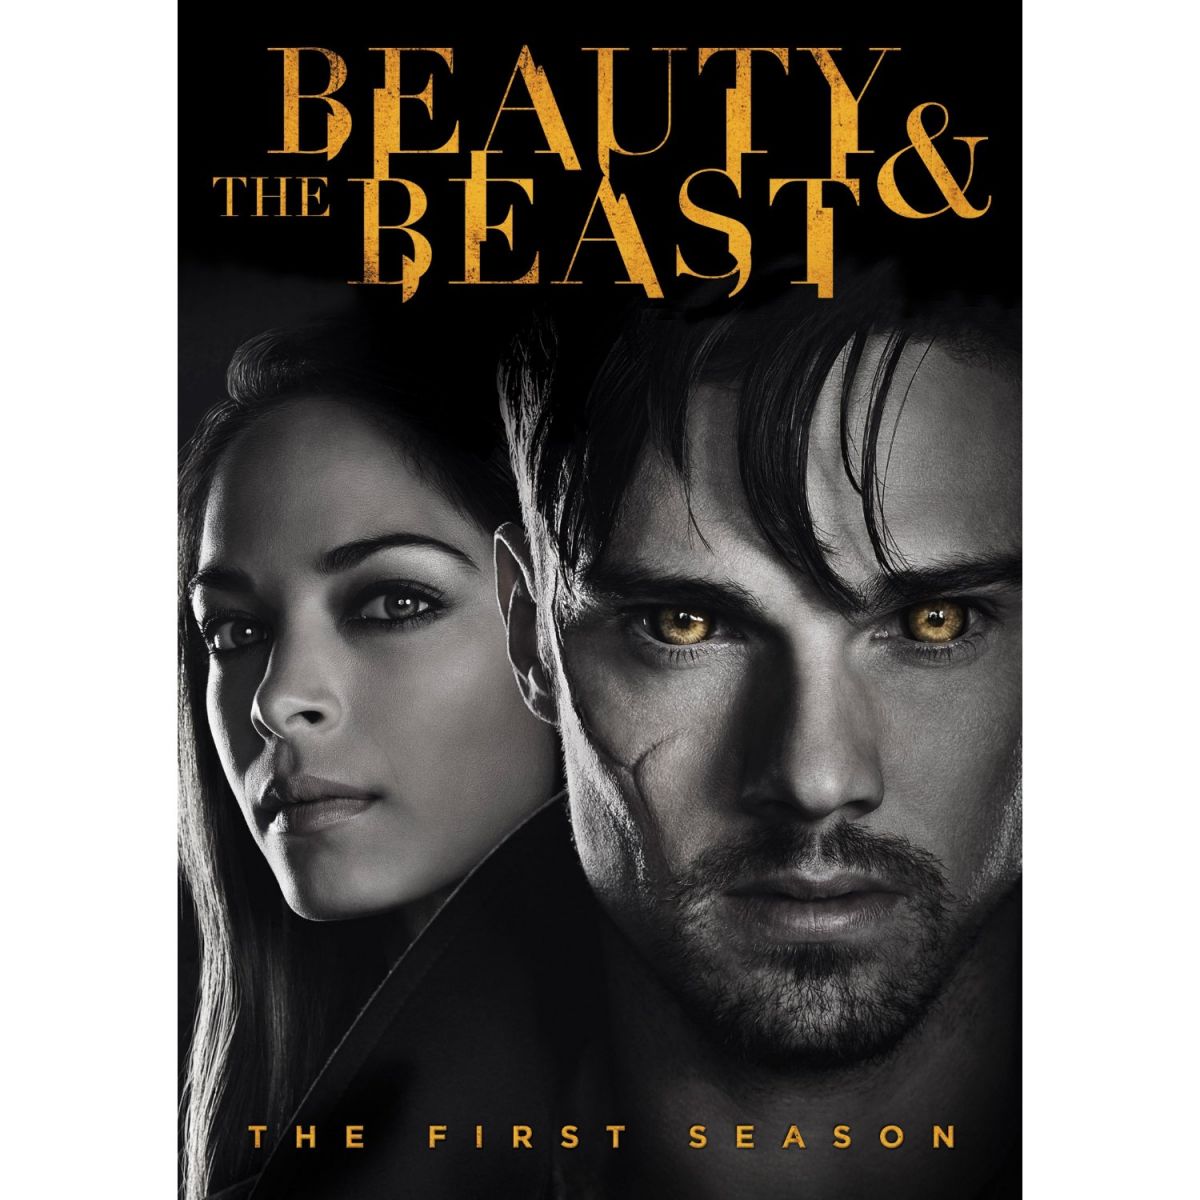 Beauty and the beast the fist season 